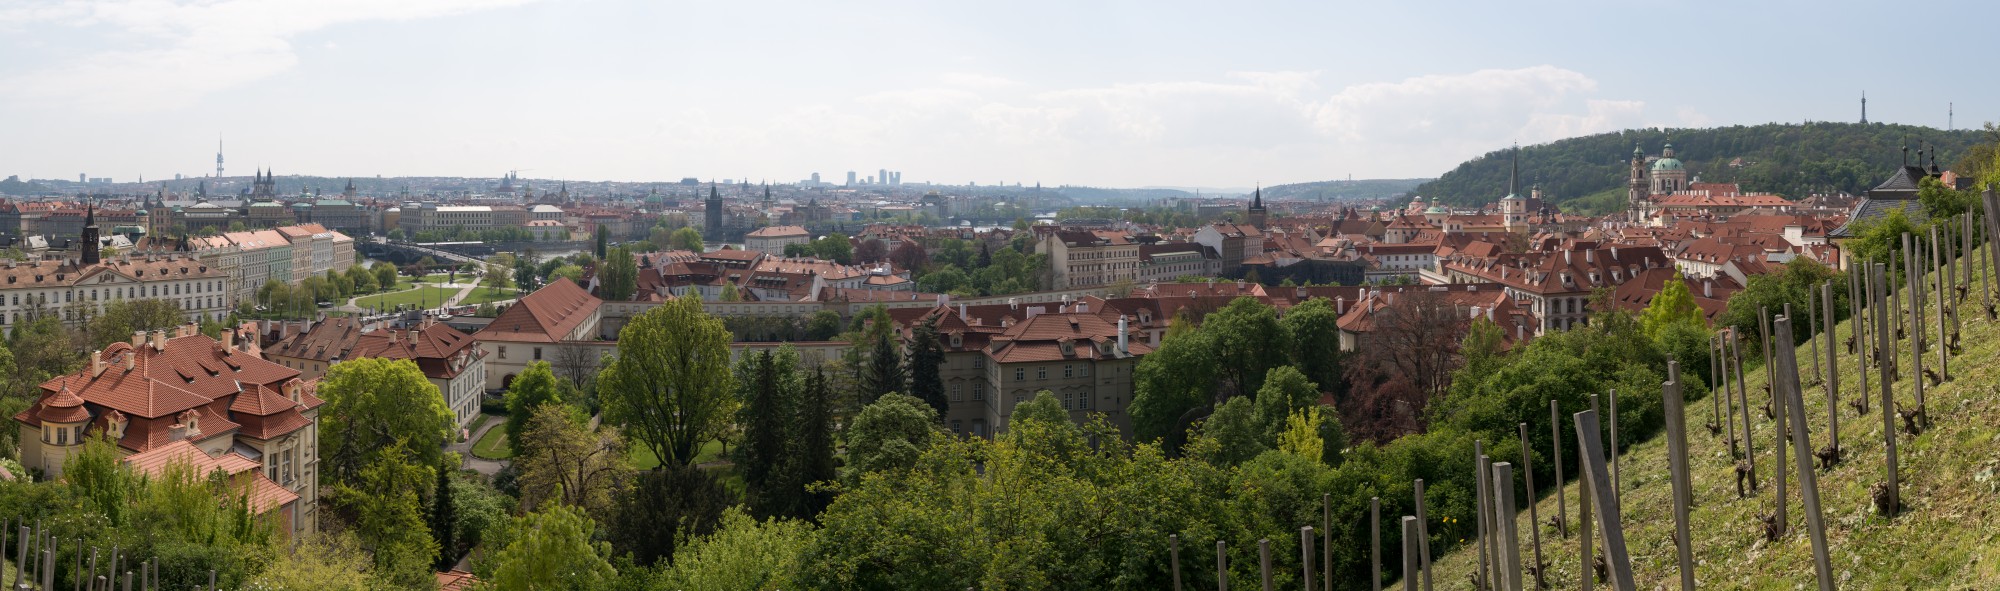 Praha Panorama from Hradčany 20170430 01